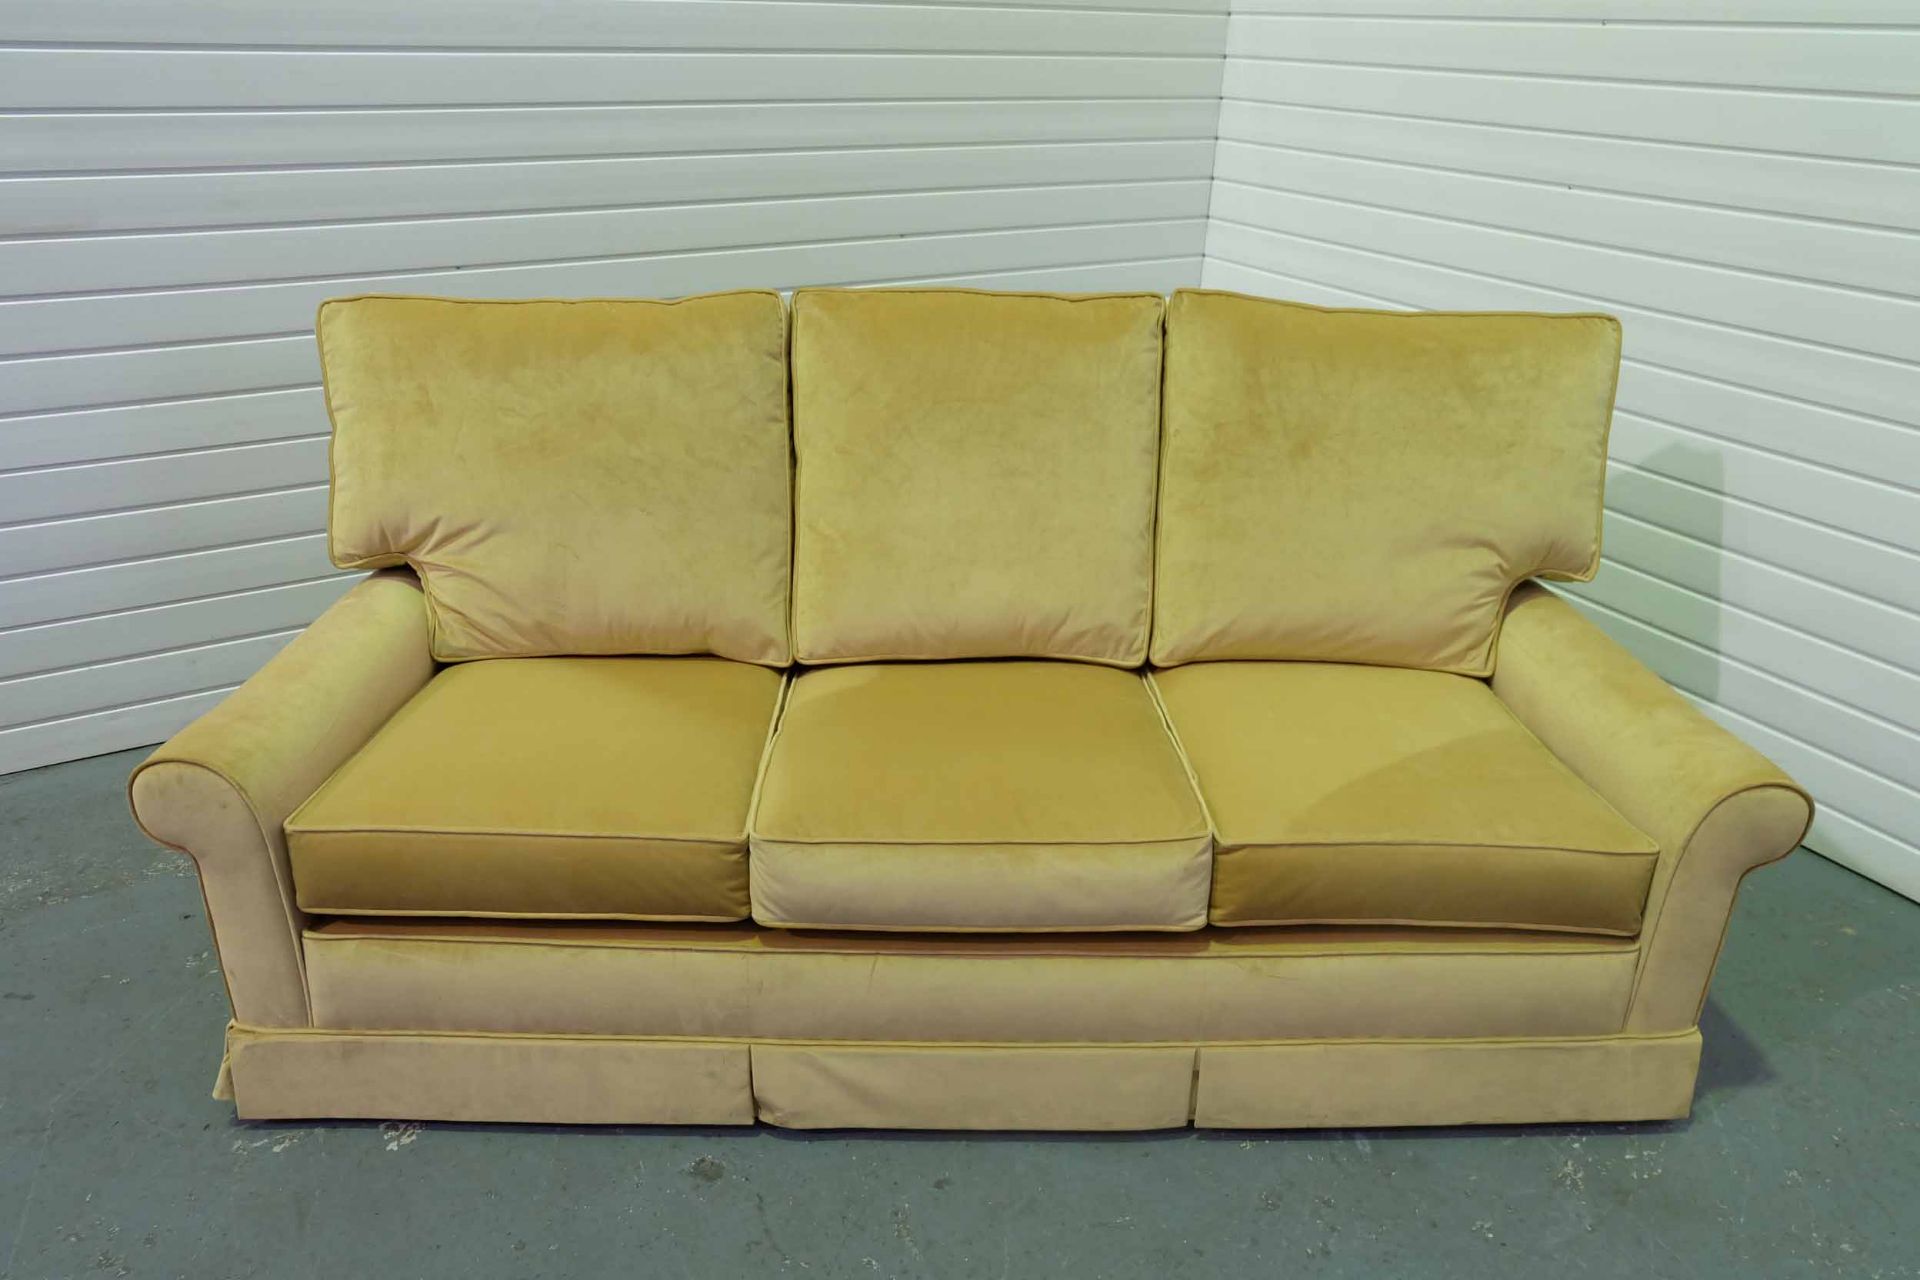 Steed Upholstery 'Hammond' Range 3 Seater Sofa. With Valance.